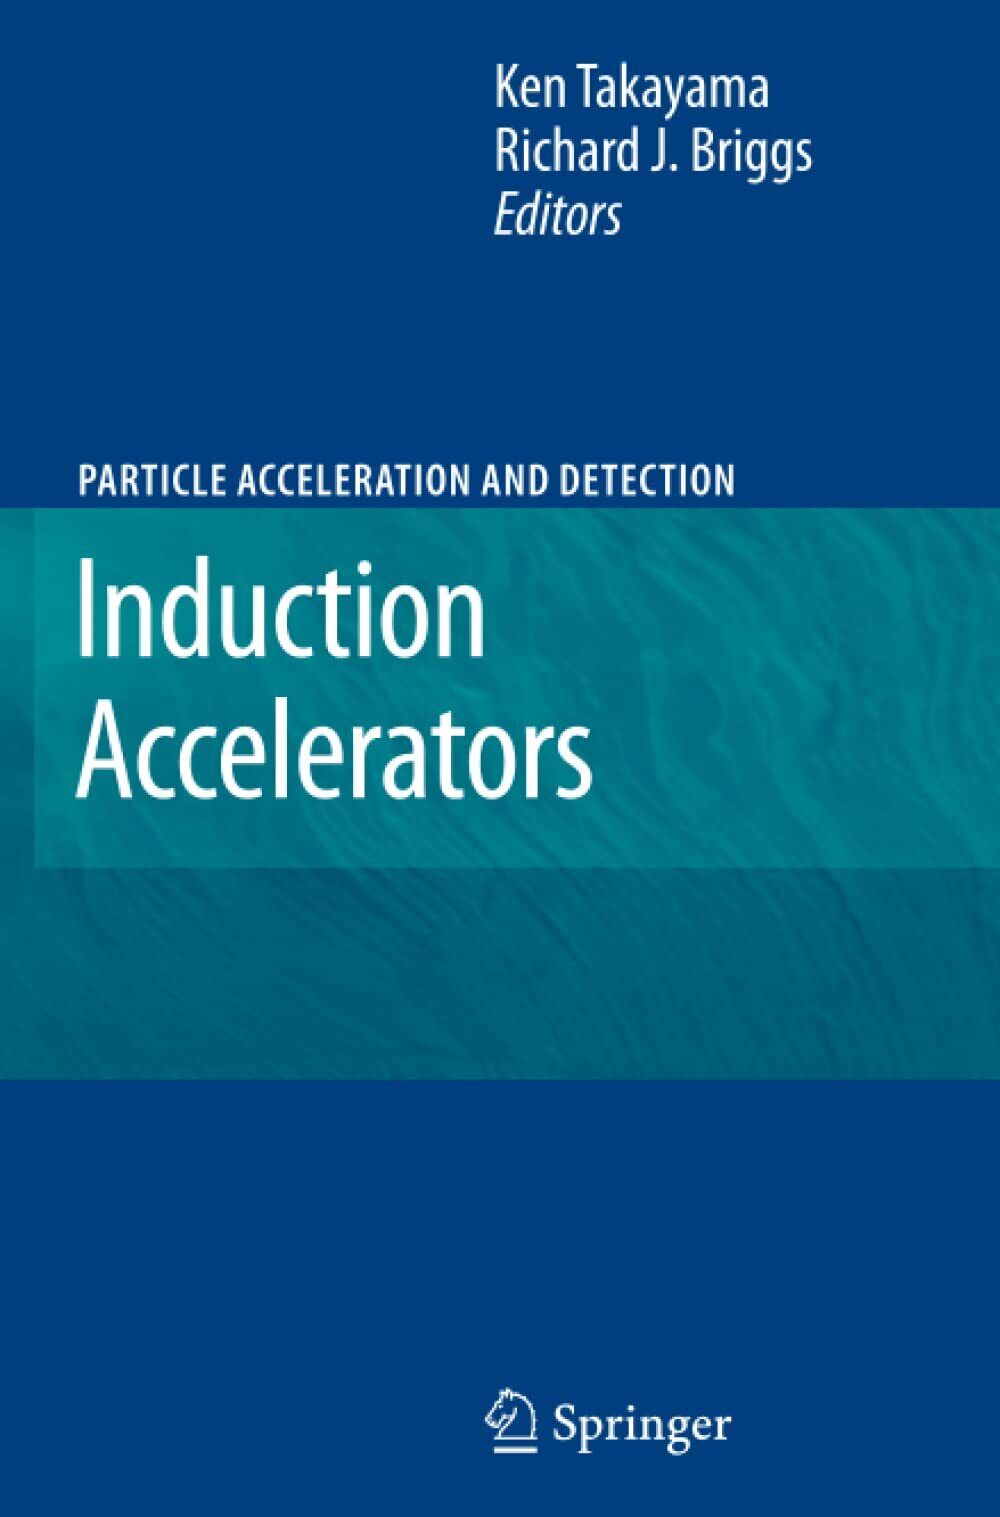 Induction Accelerators - Ken Takayama - Springer, 2012